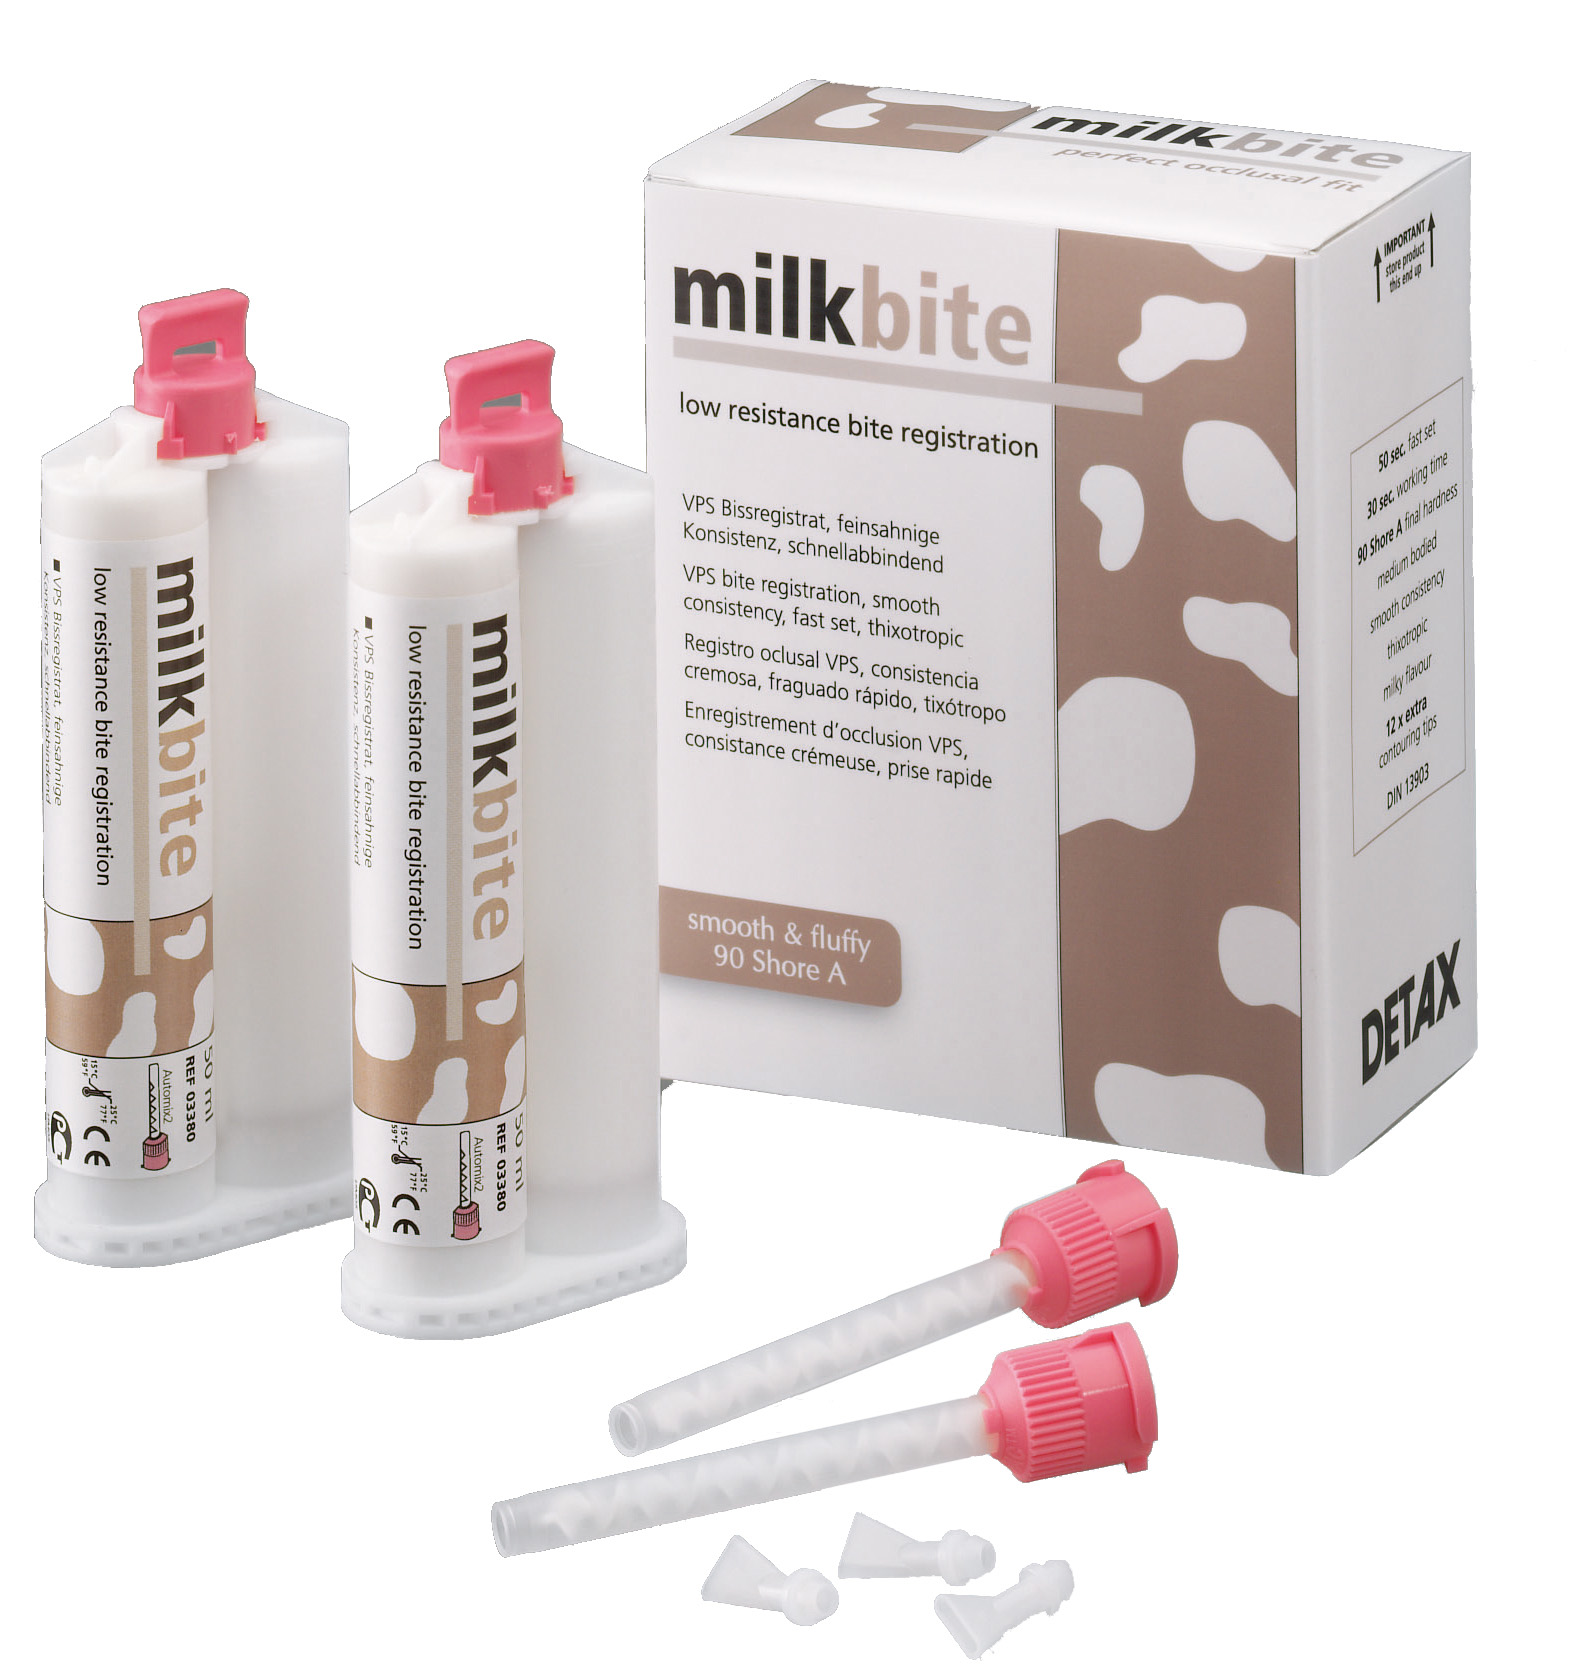 Detax-Milkbite-Set-(2-Cartridges,12-Tips,12-Cannuals)